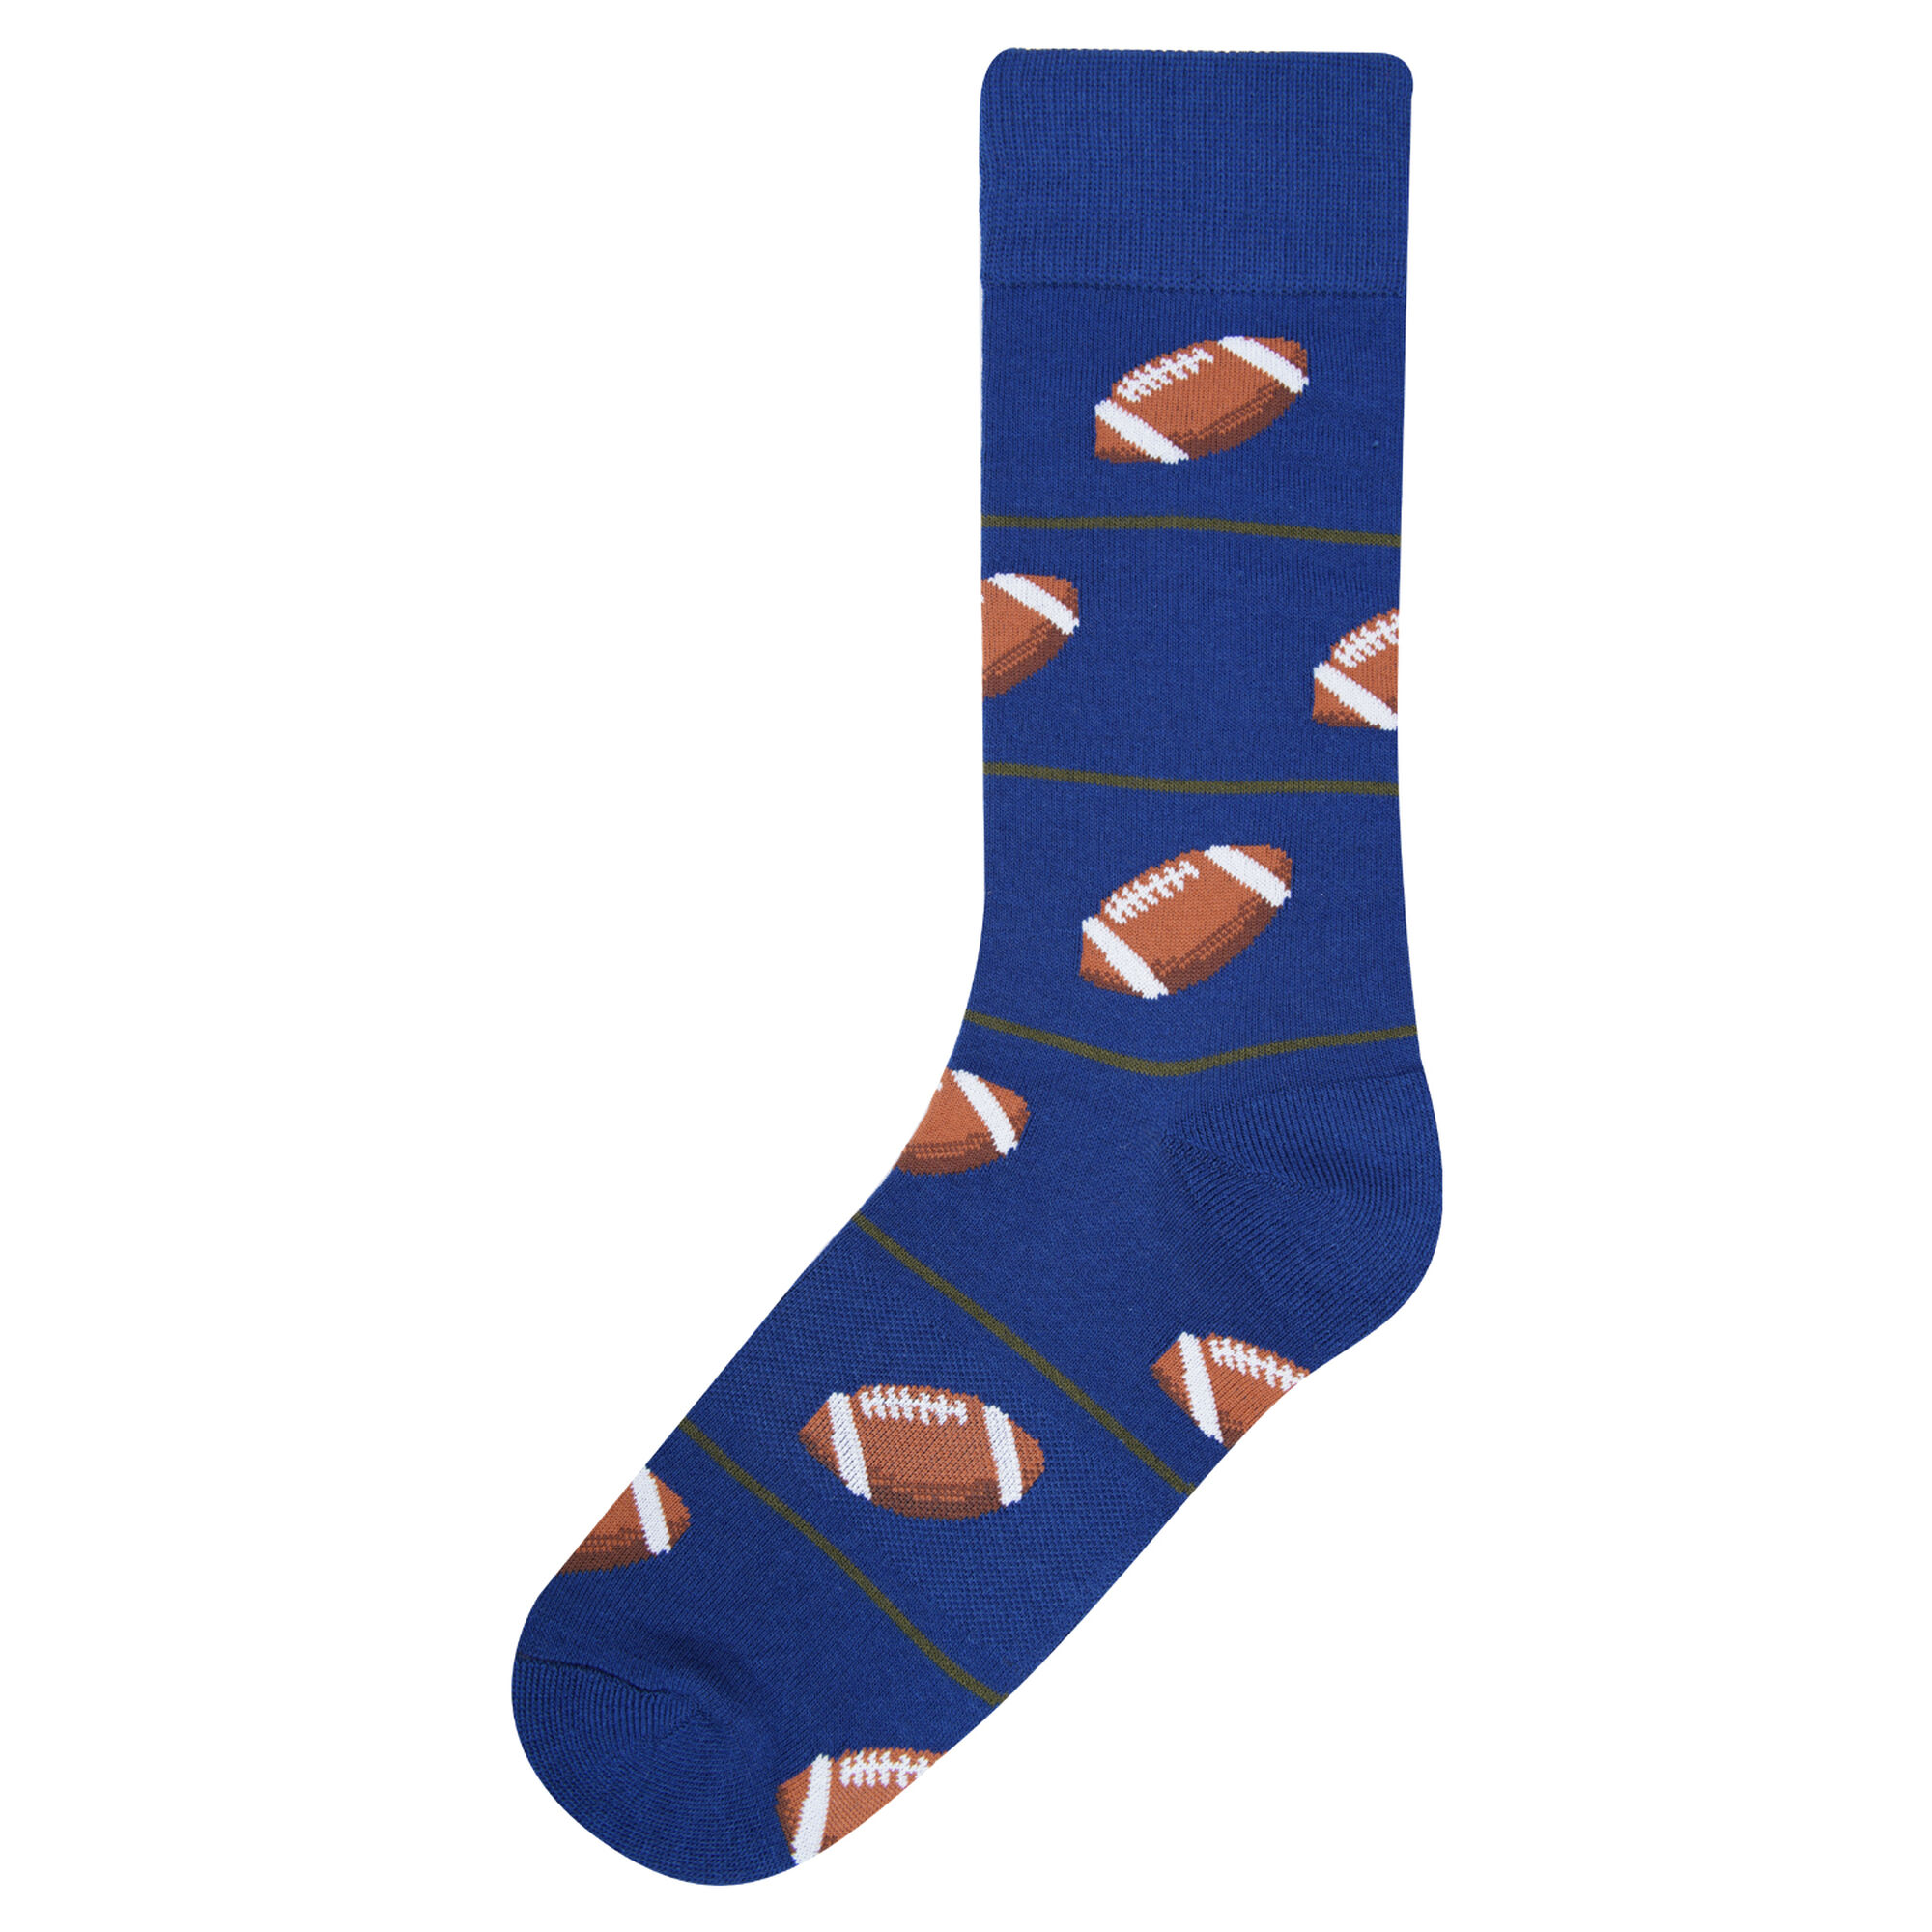 Haggar Football Socks Navy (5R19-2033 Clothing Underwear & Socks) photo